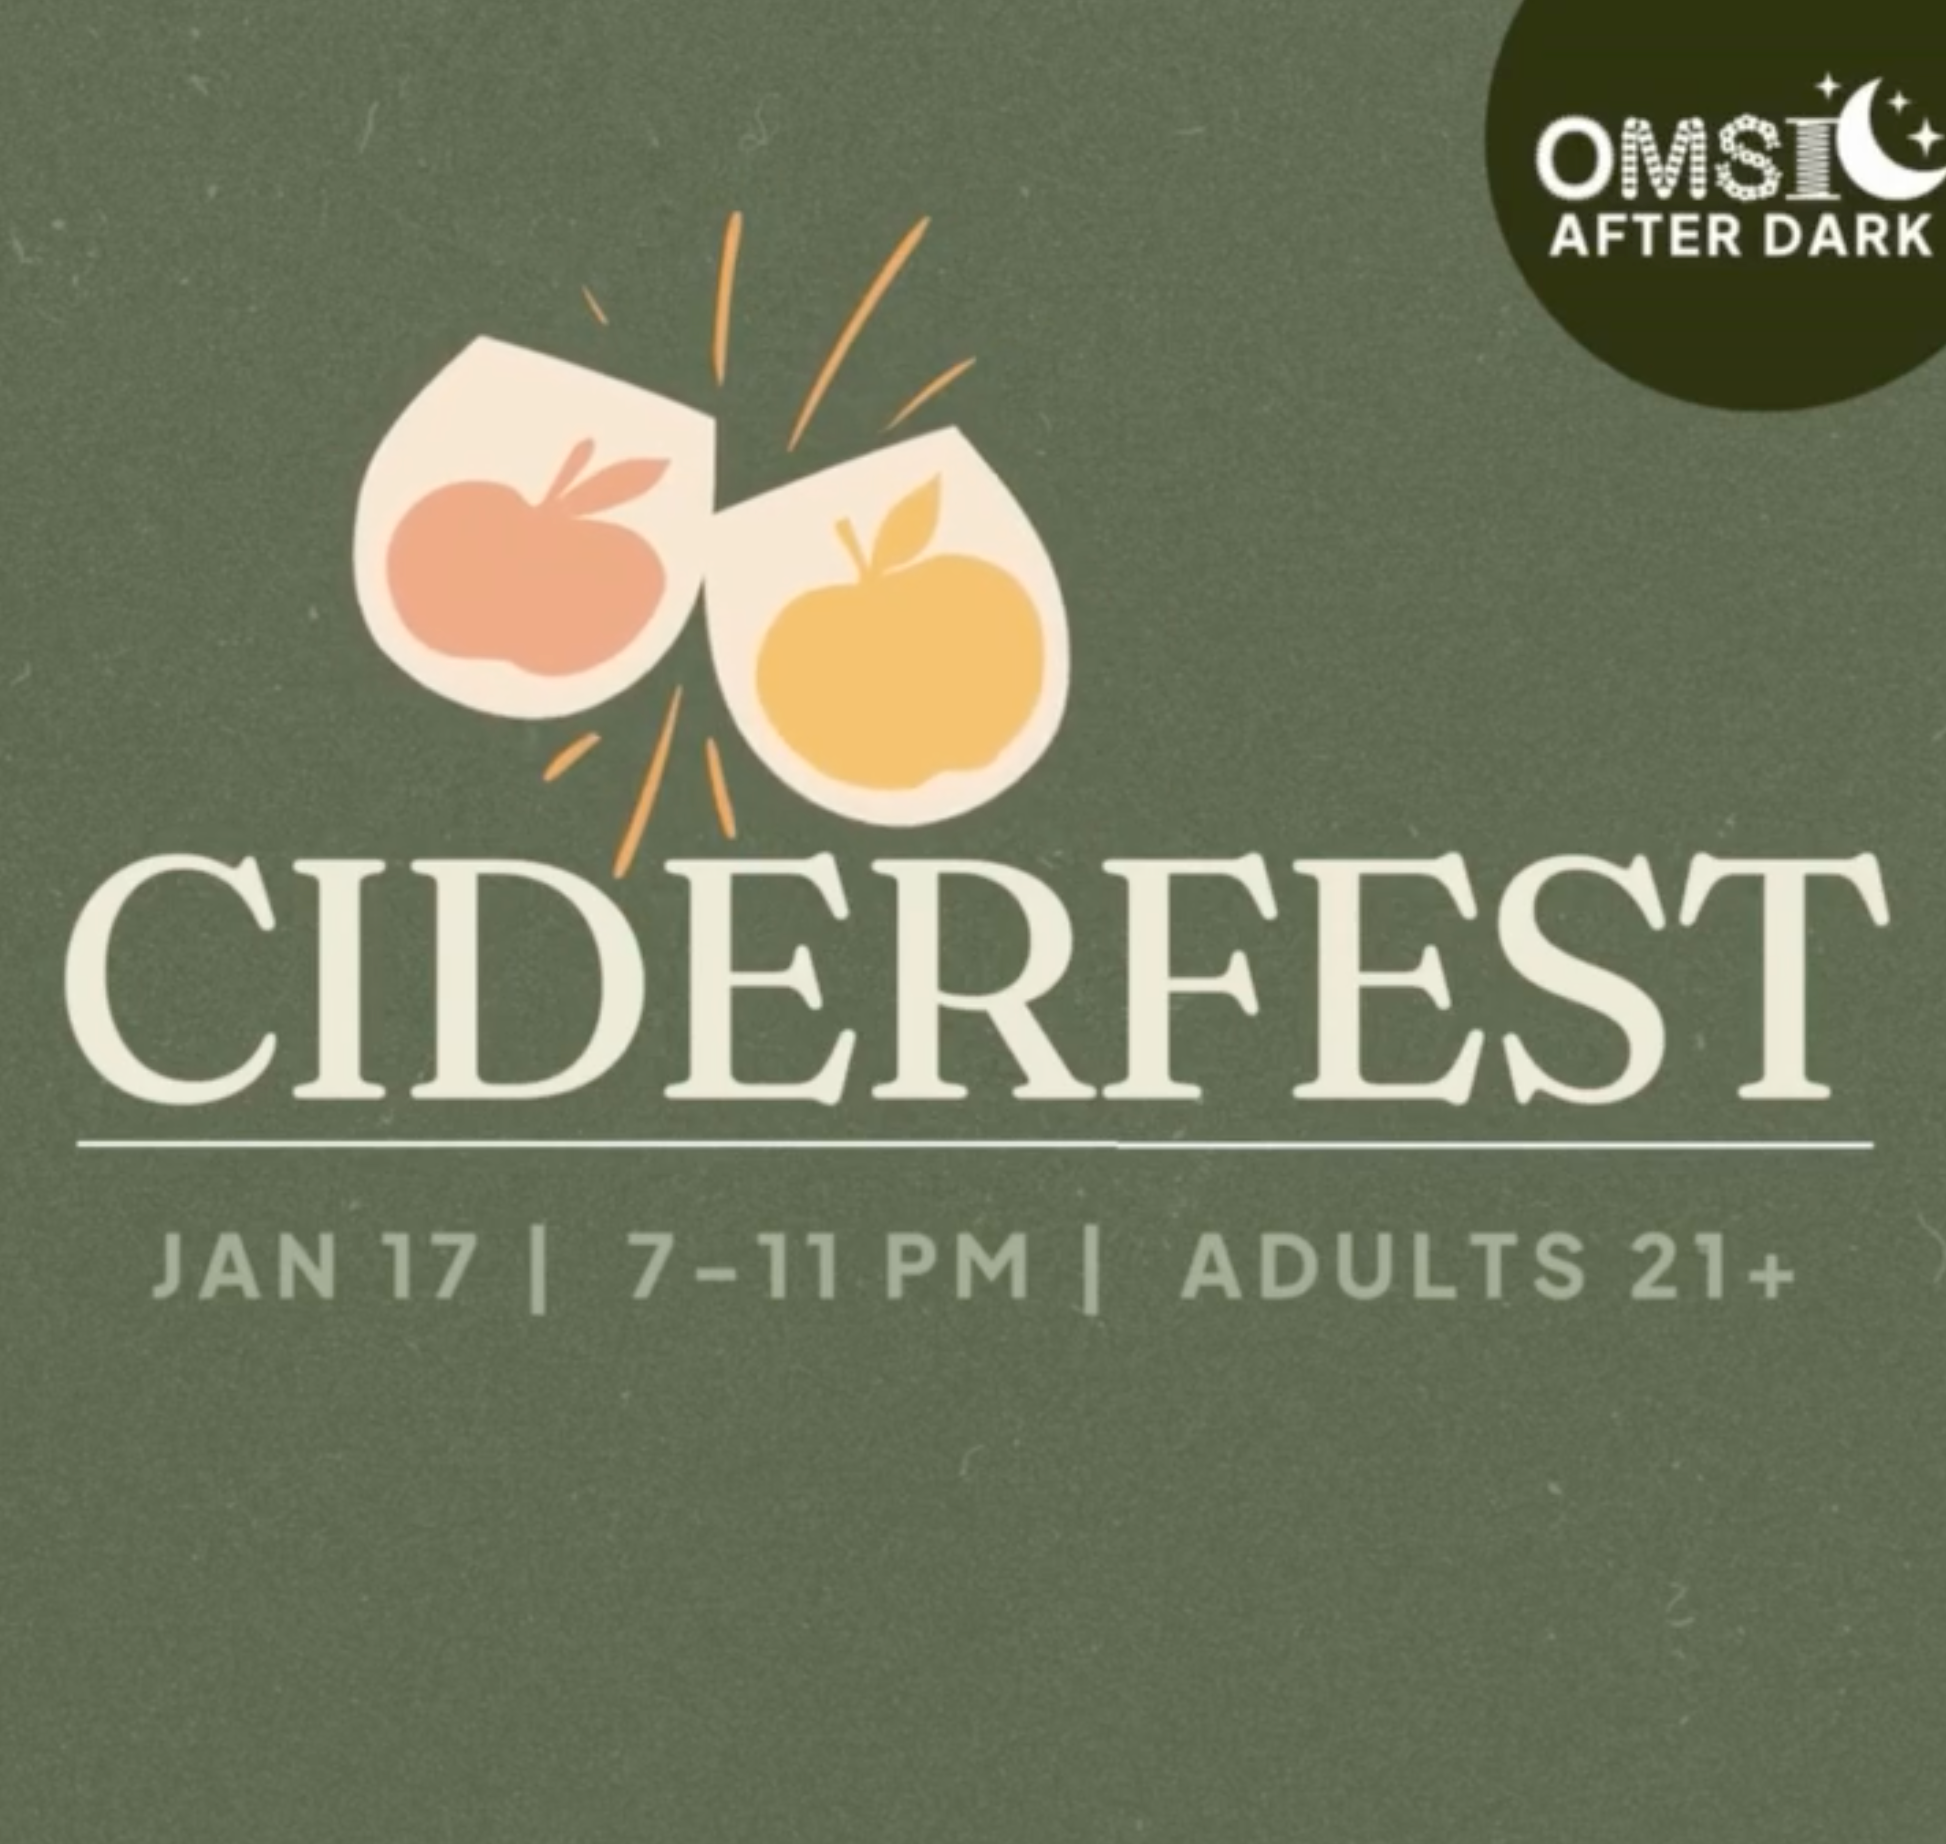 OMSI After Dark Ciderfest marketing flyer